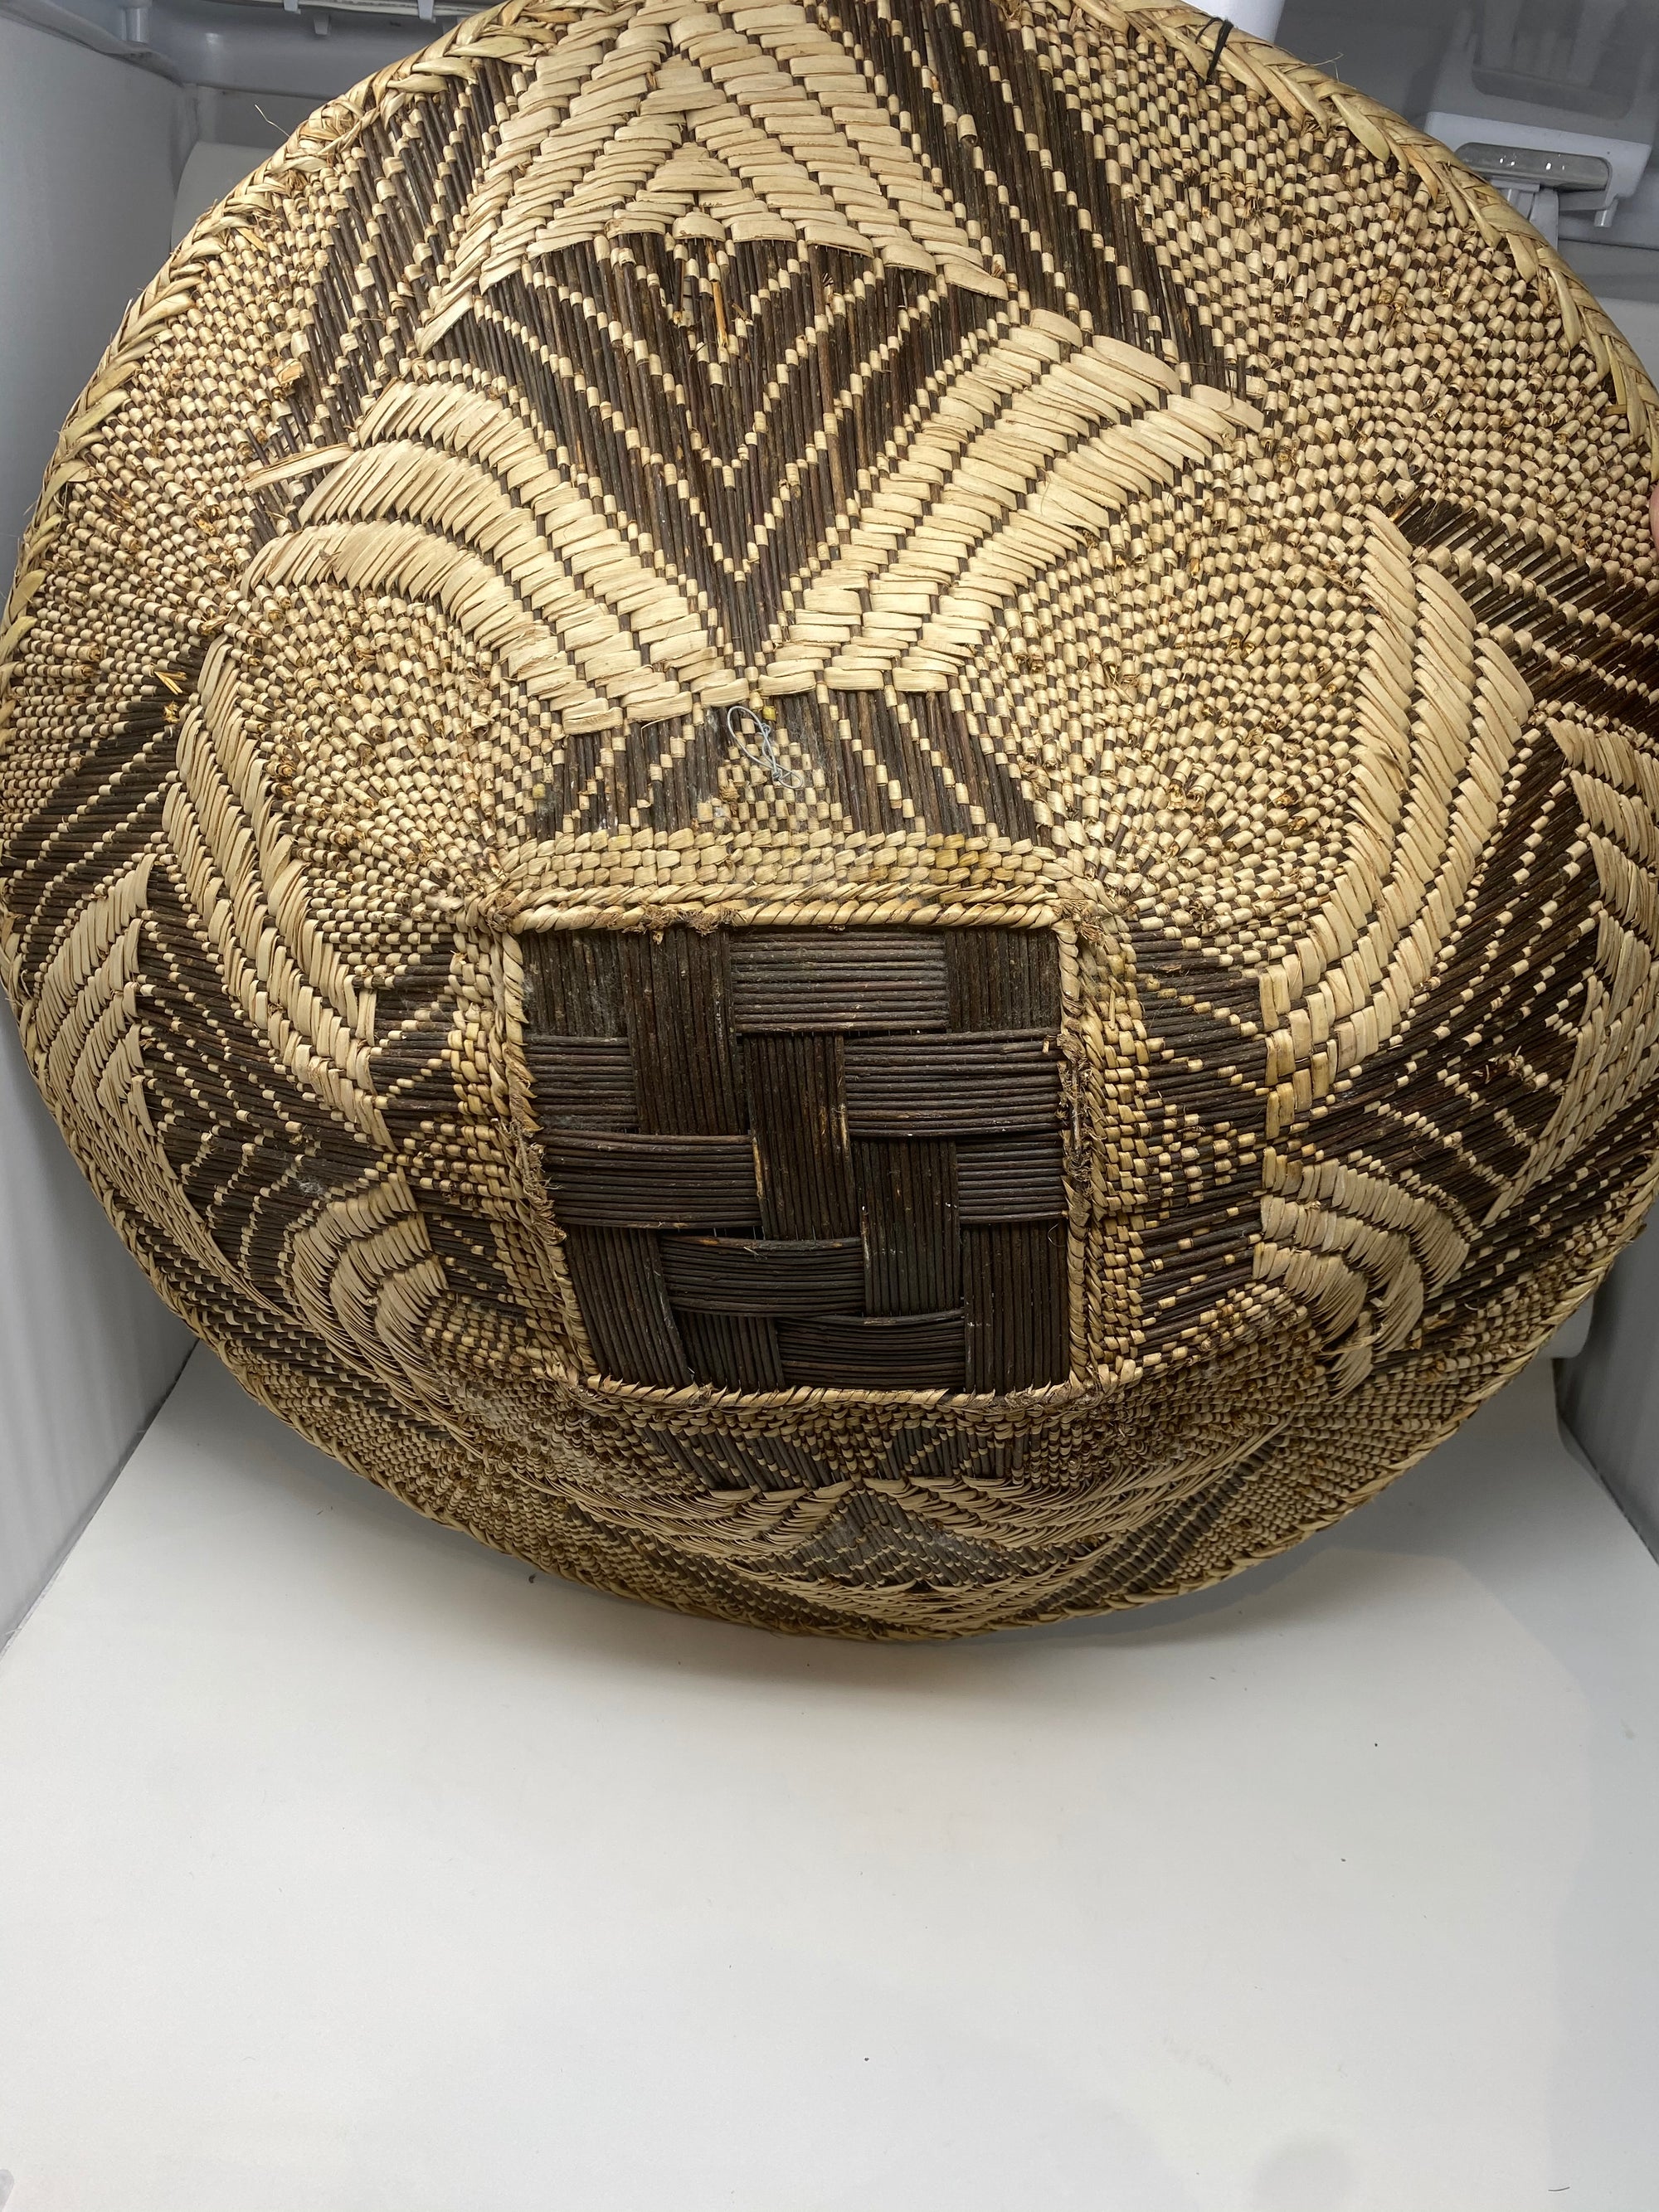 Painted Tonga Baskets